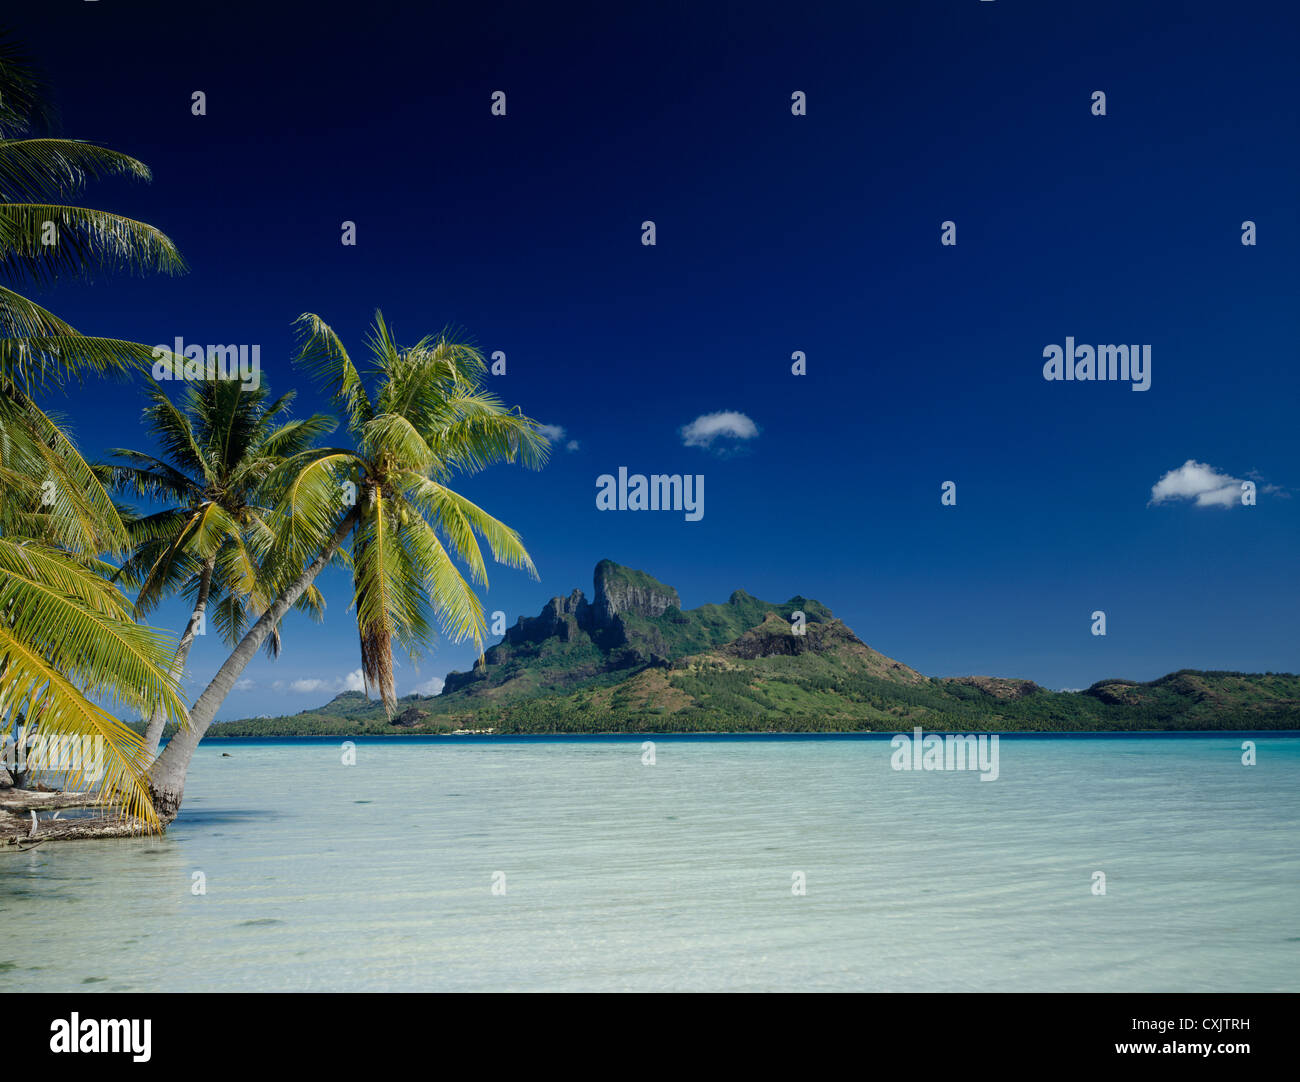 Bora Bora island with palm trees Stock Photo